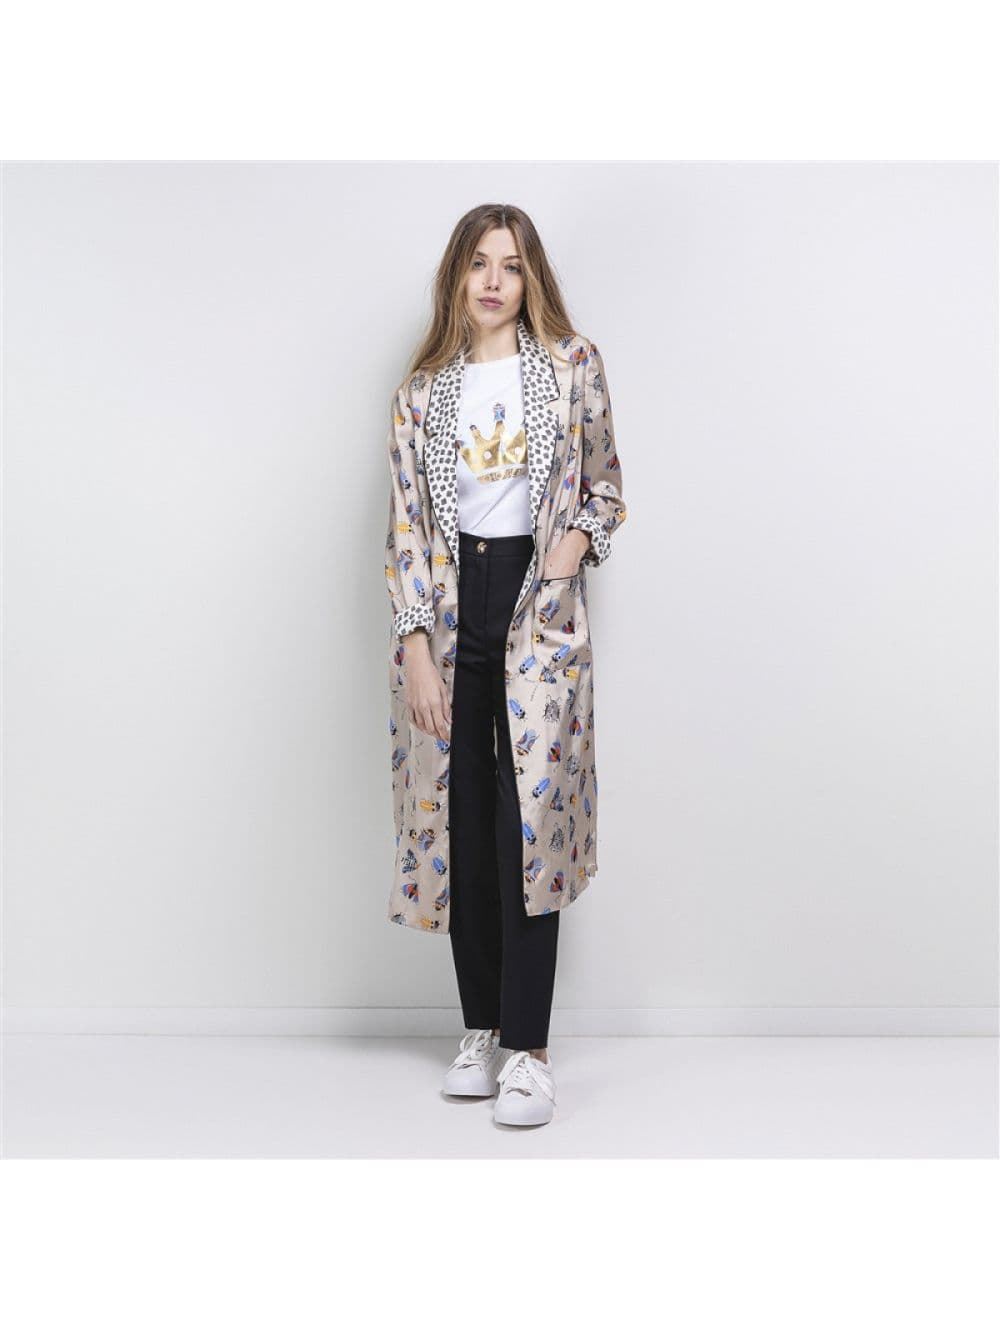 Kimono Chokolat fashion estampado fluido - Imagen 1